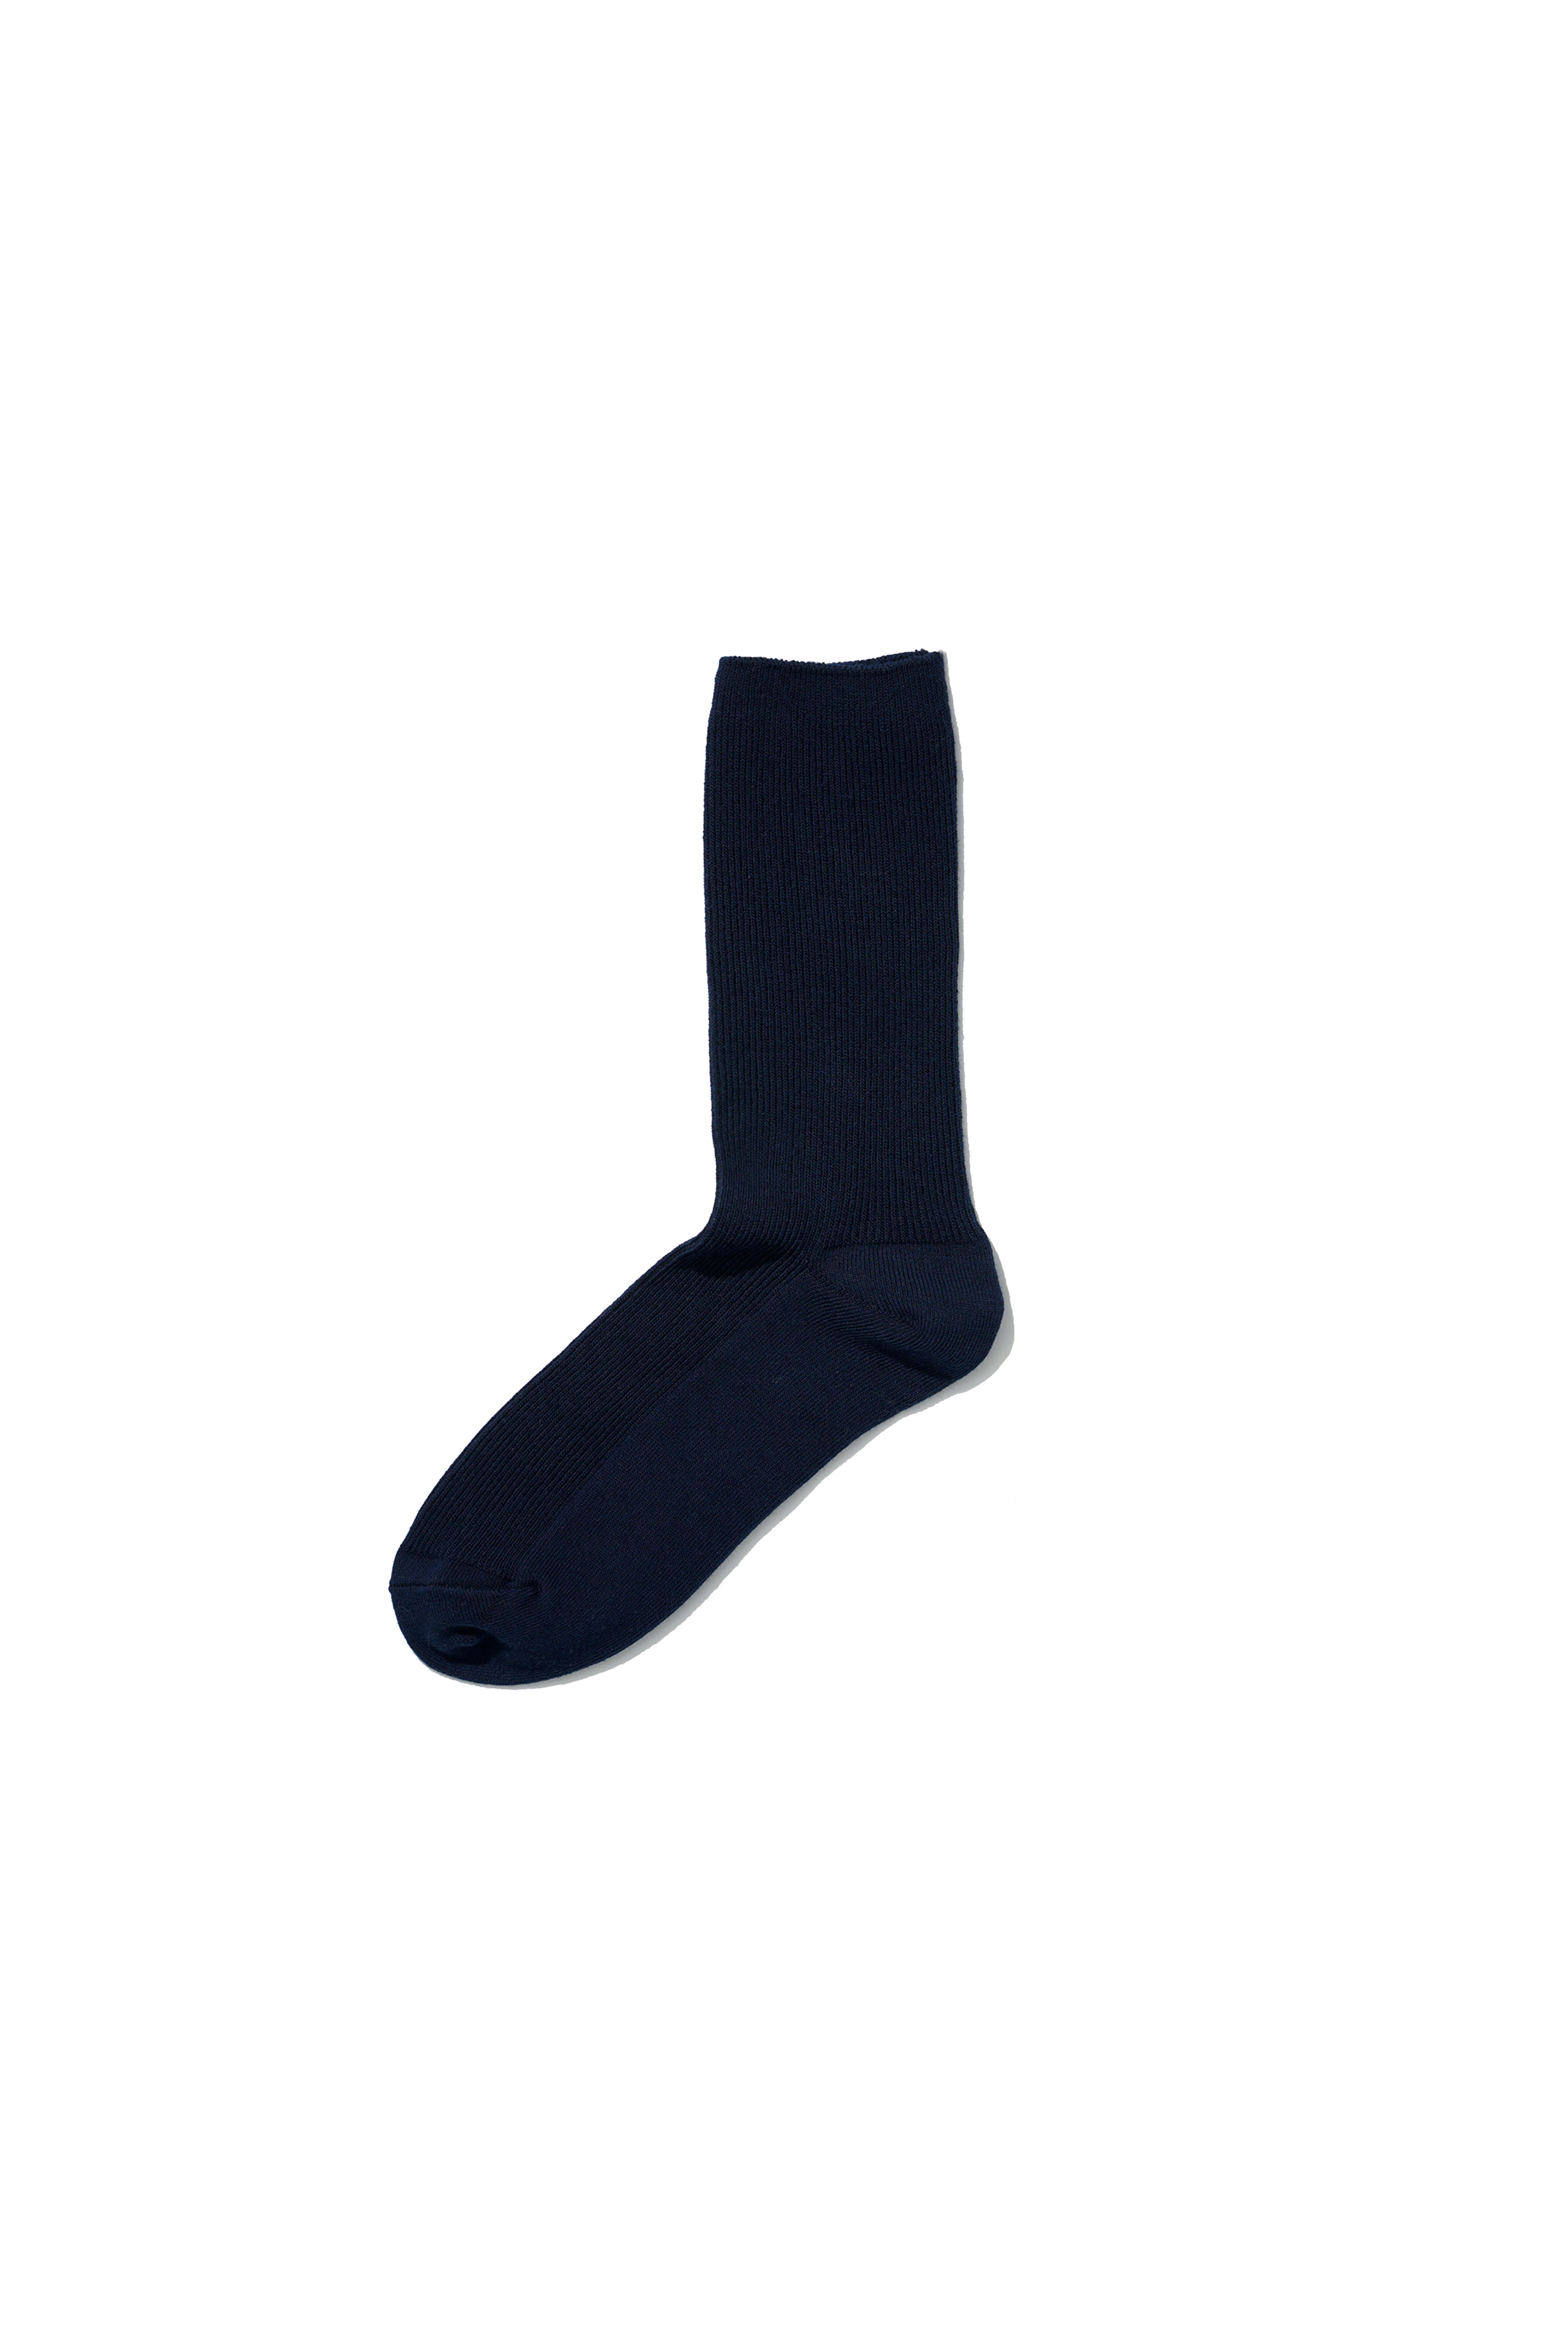 (Exclusive) Essential Socks Navy